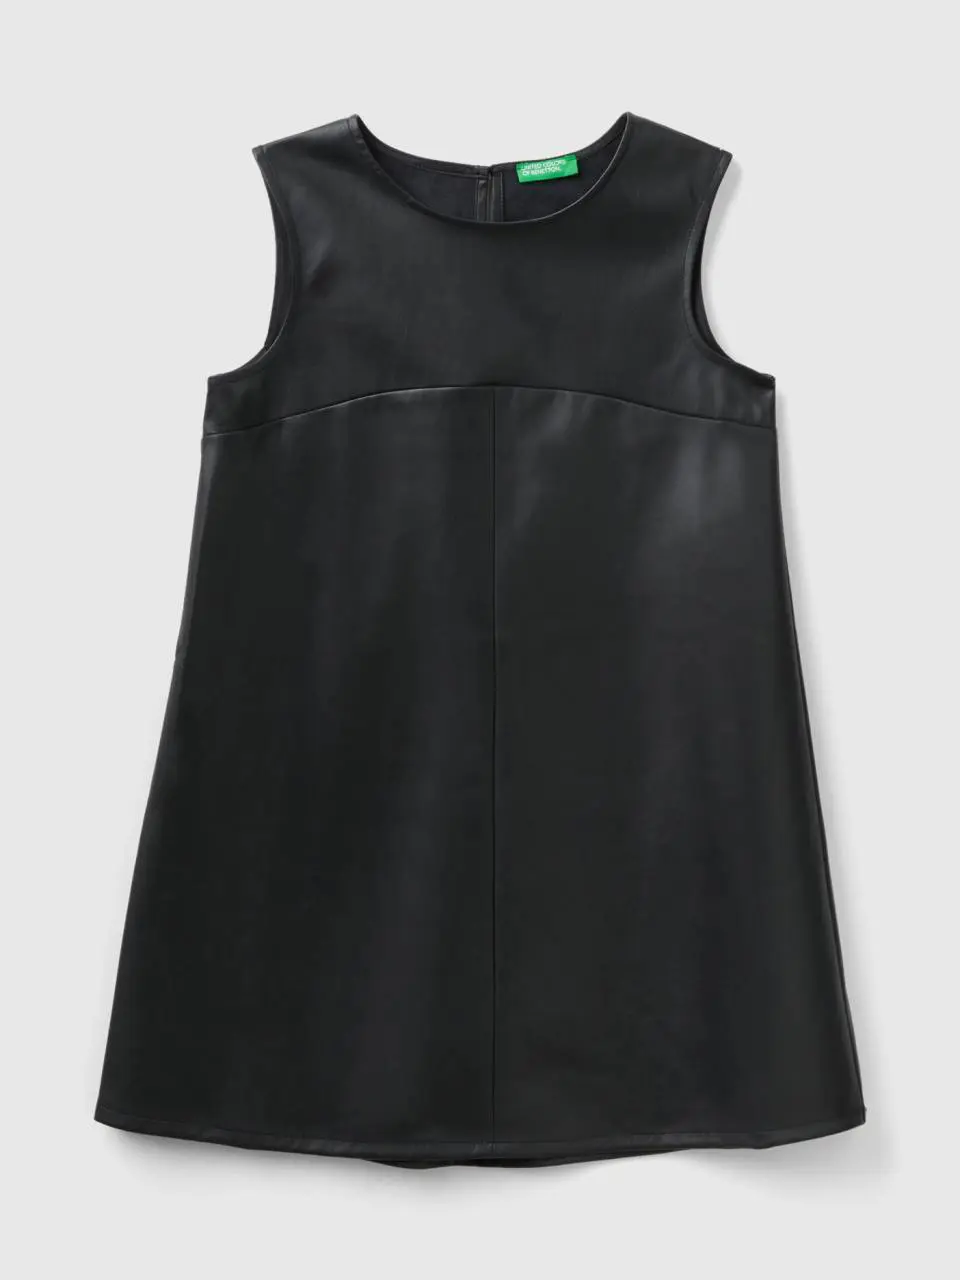 Benetton dress in imitation leather fabric. 1